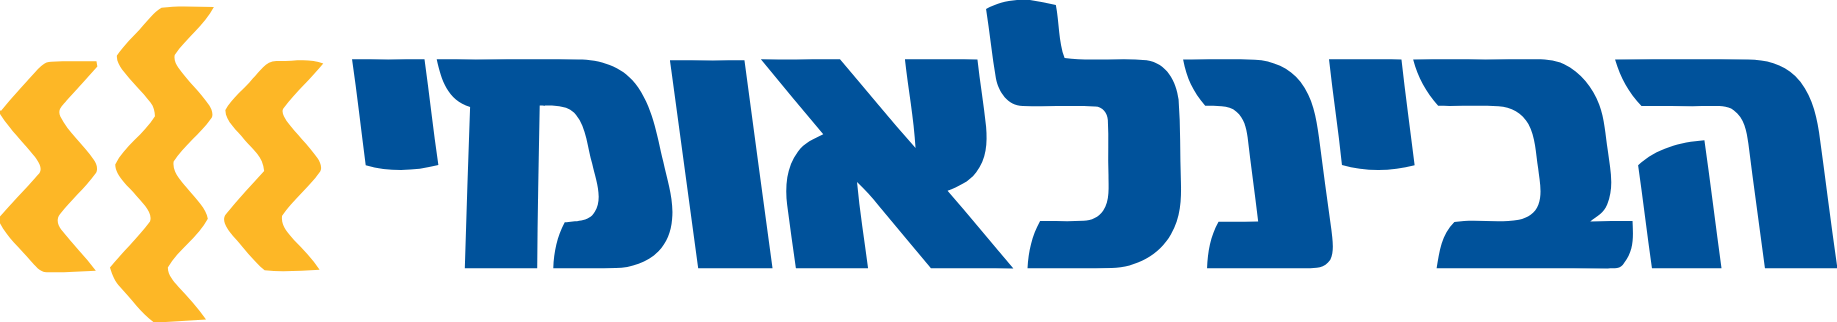 First International Bank of Israel logo large (transparent PNG)